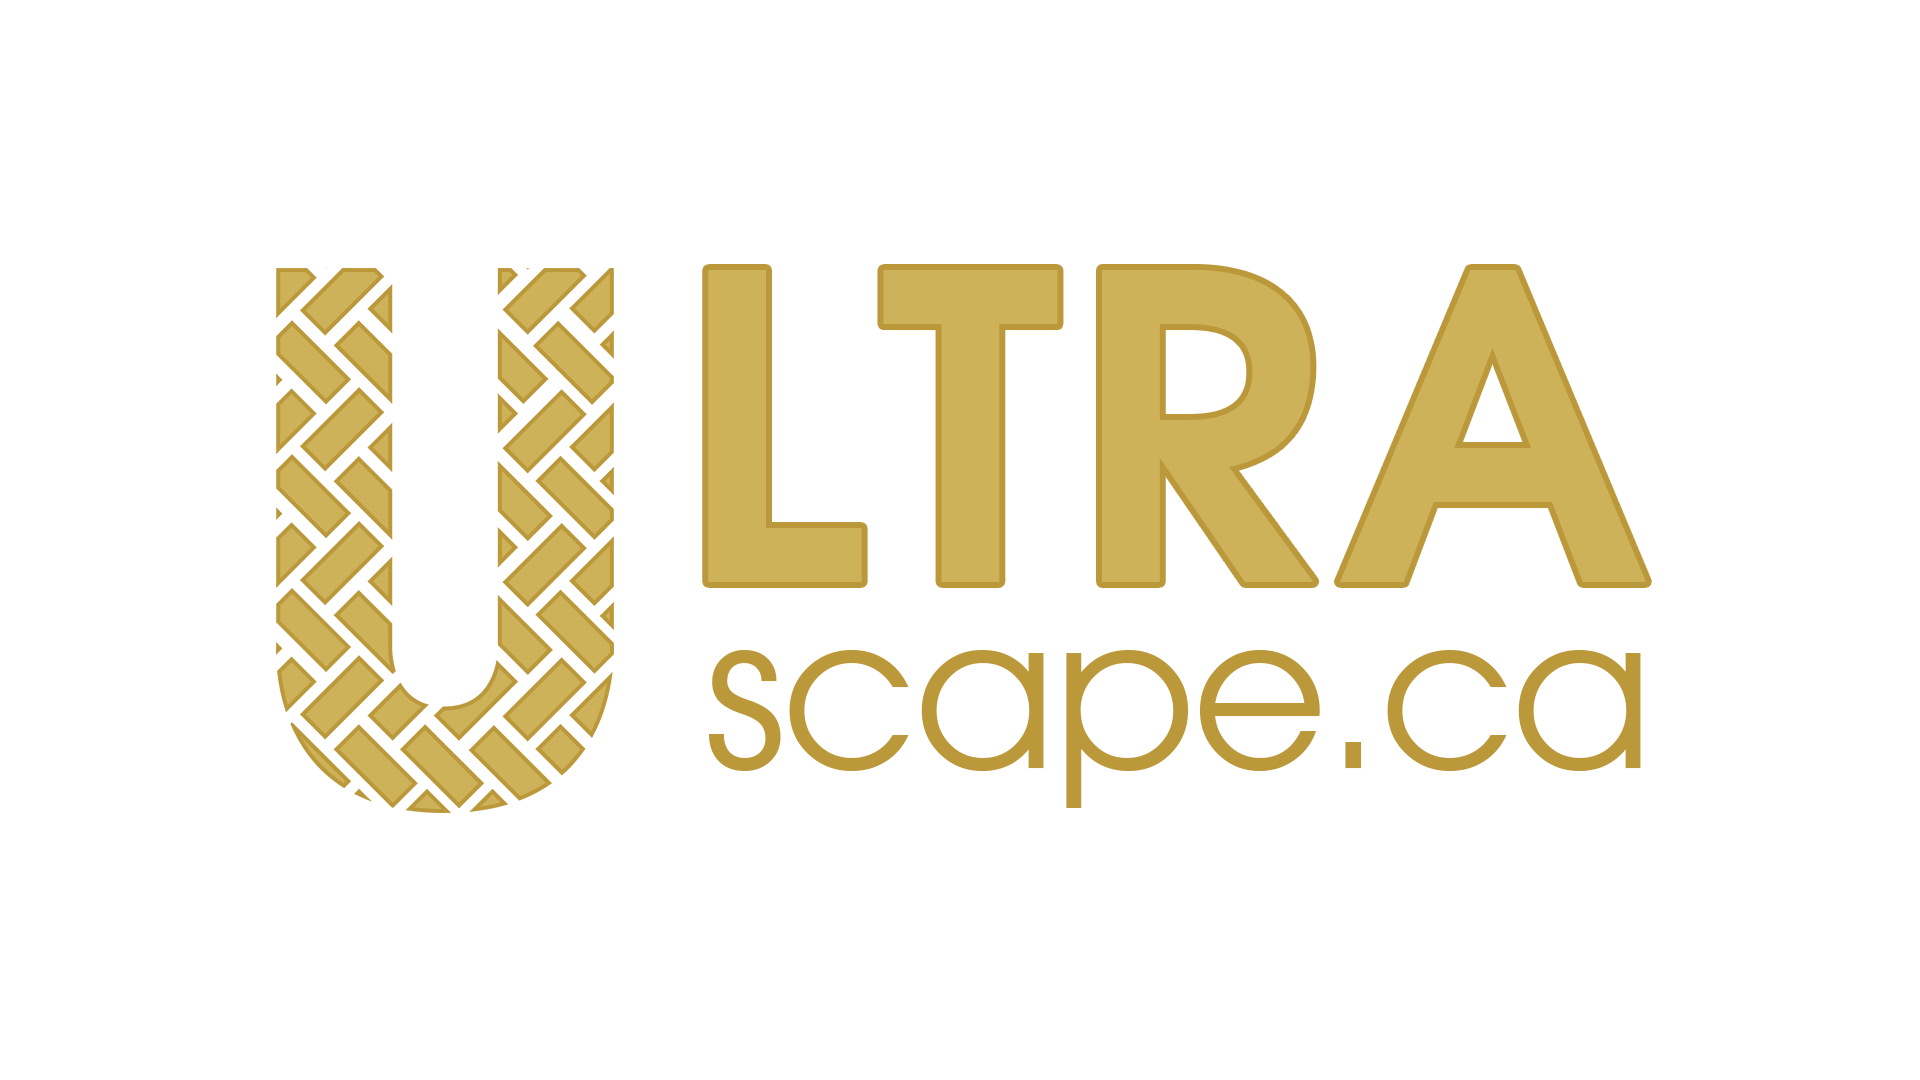 Ultra Scape's logo